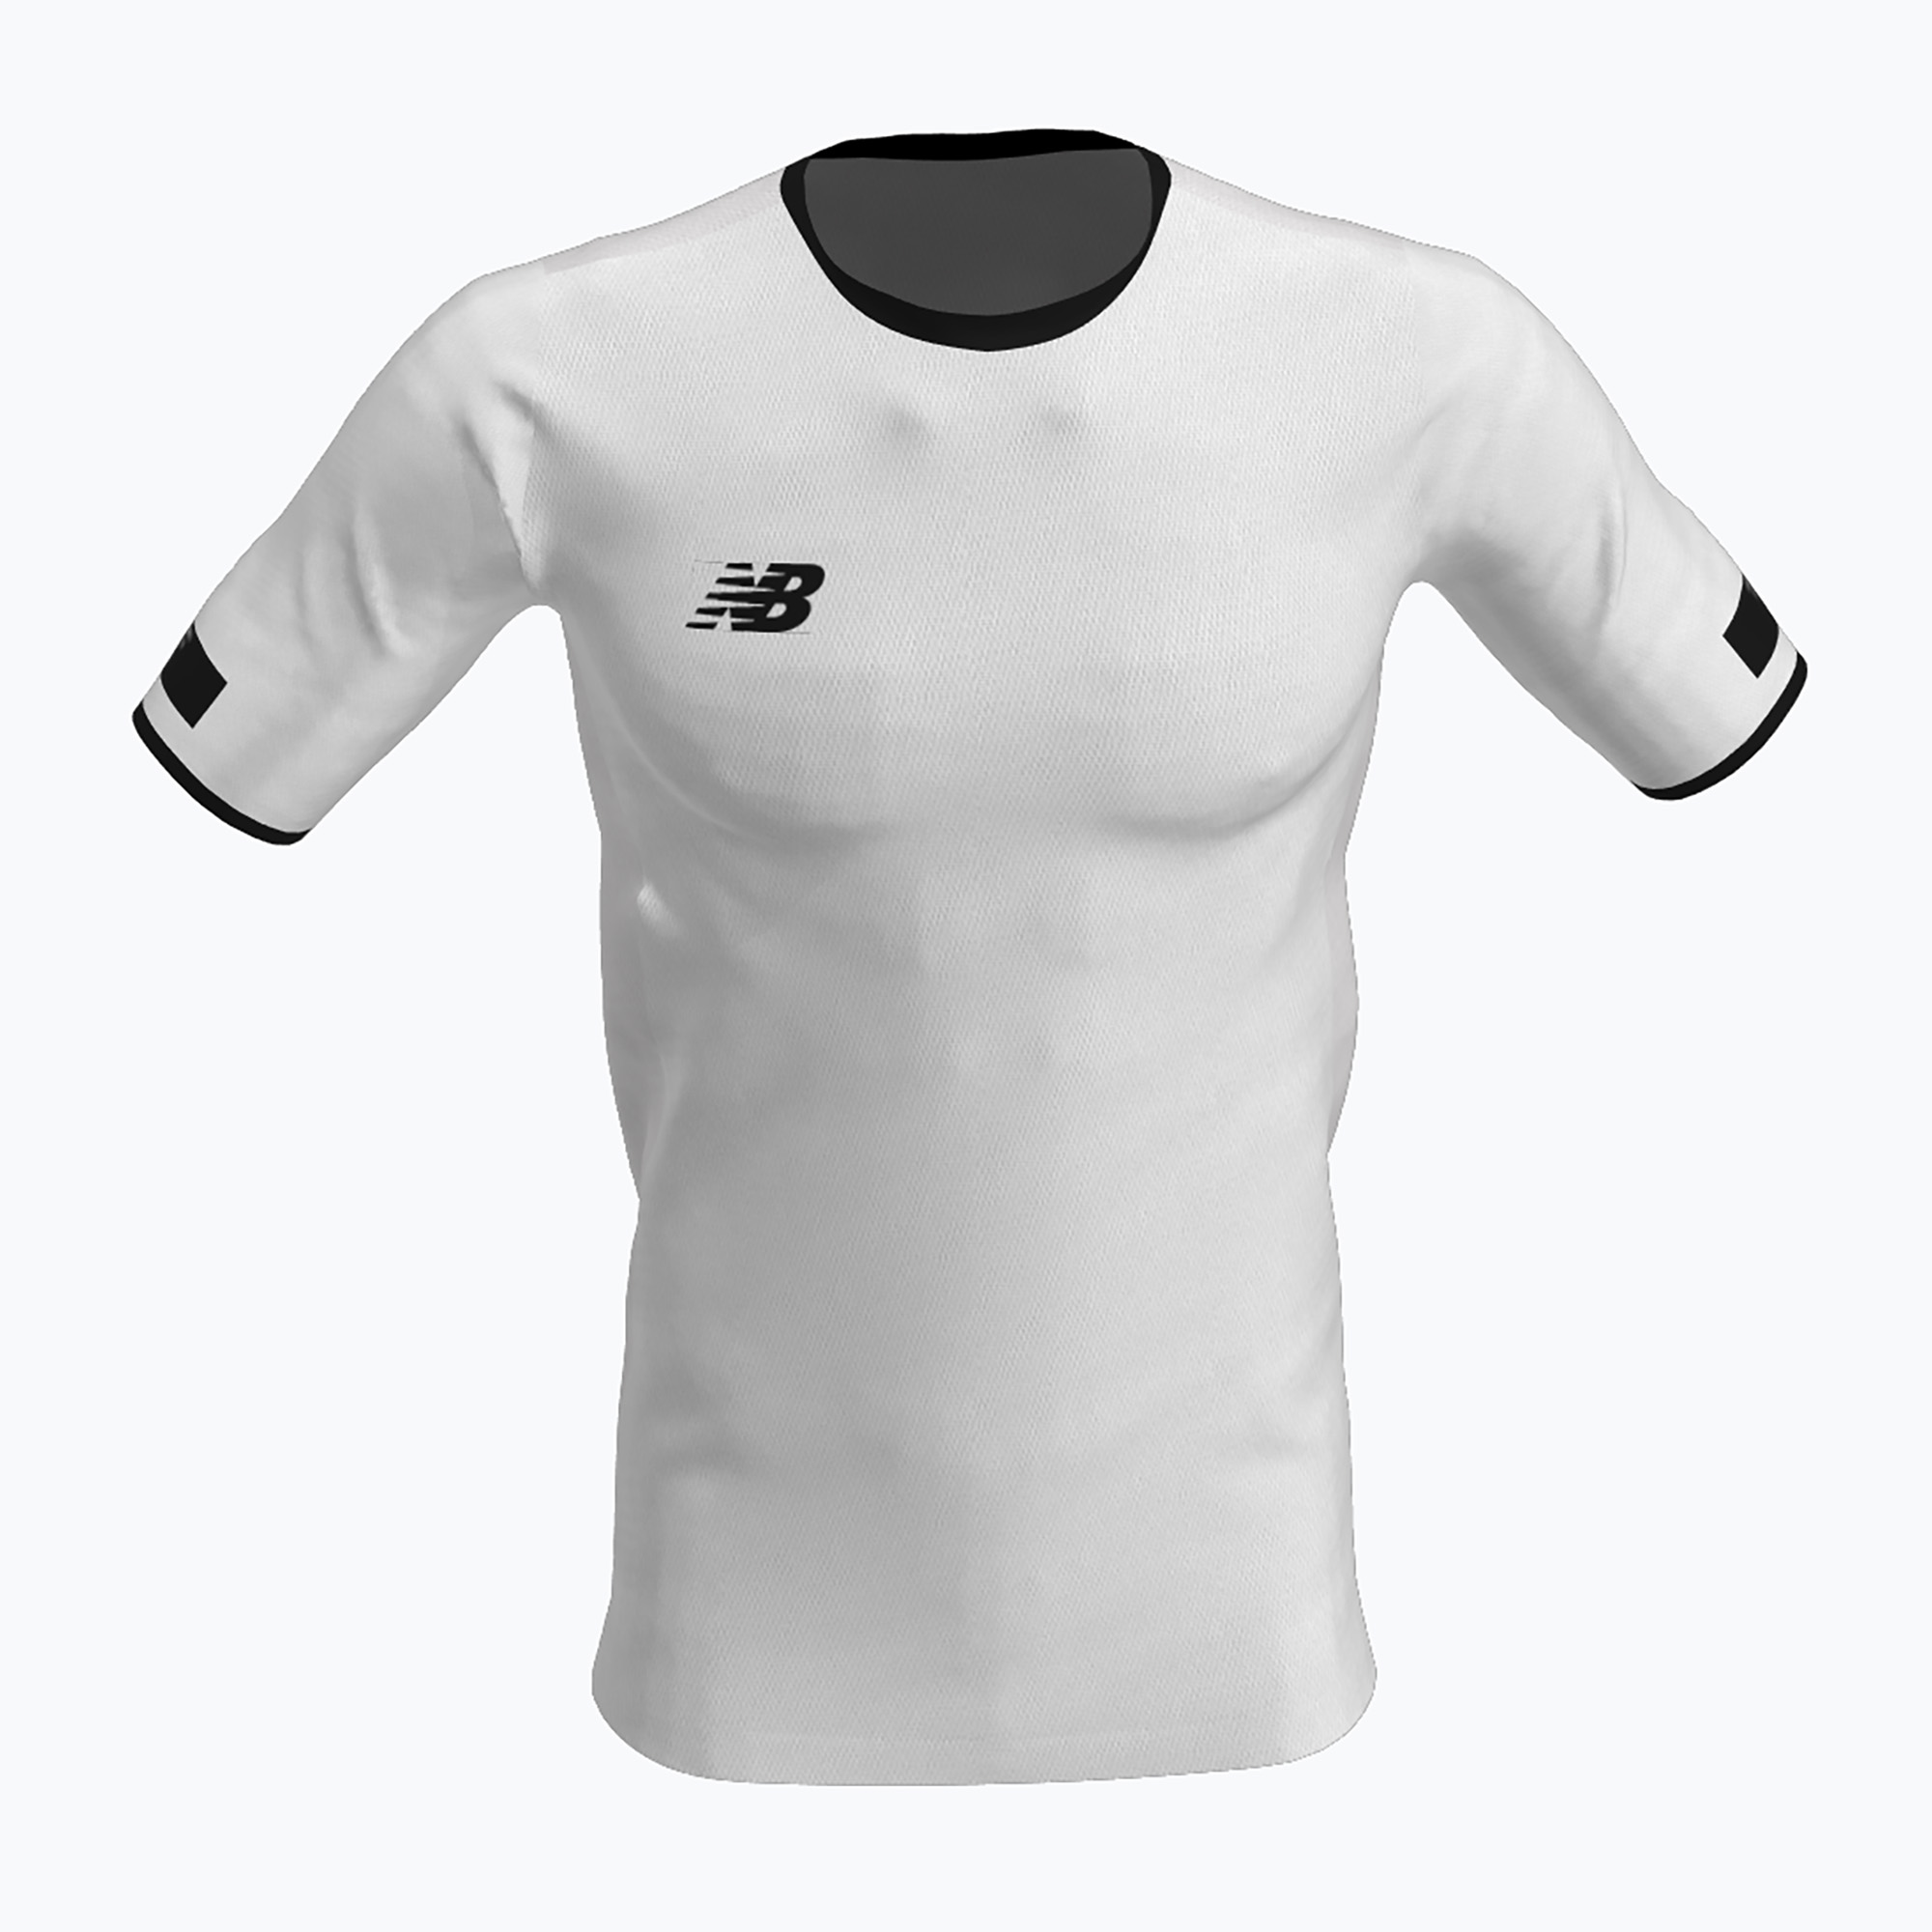 Detské futbalové tričko New Balance Turf biele NBEJT9018